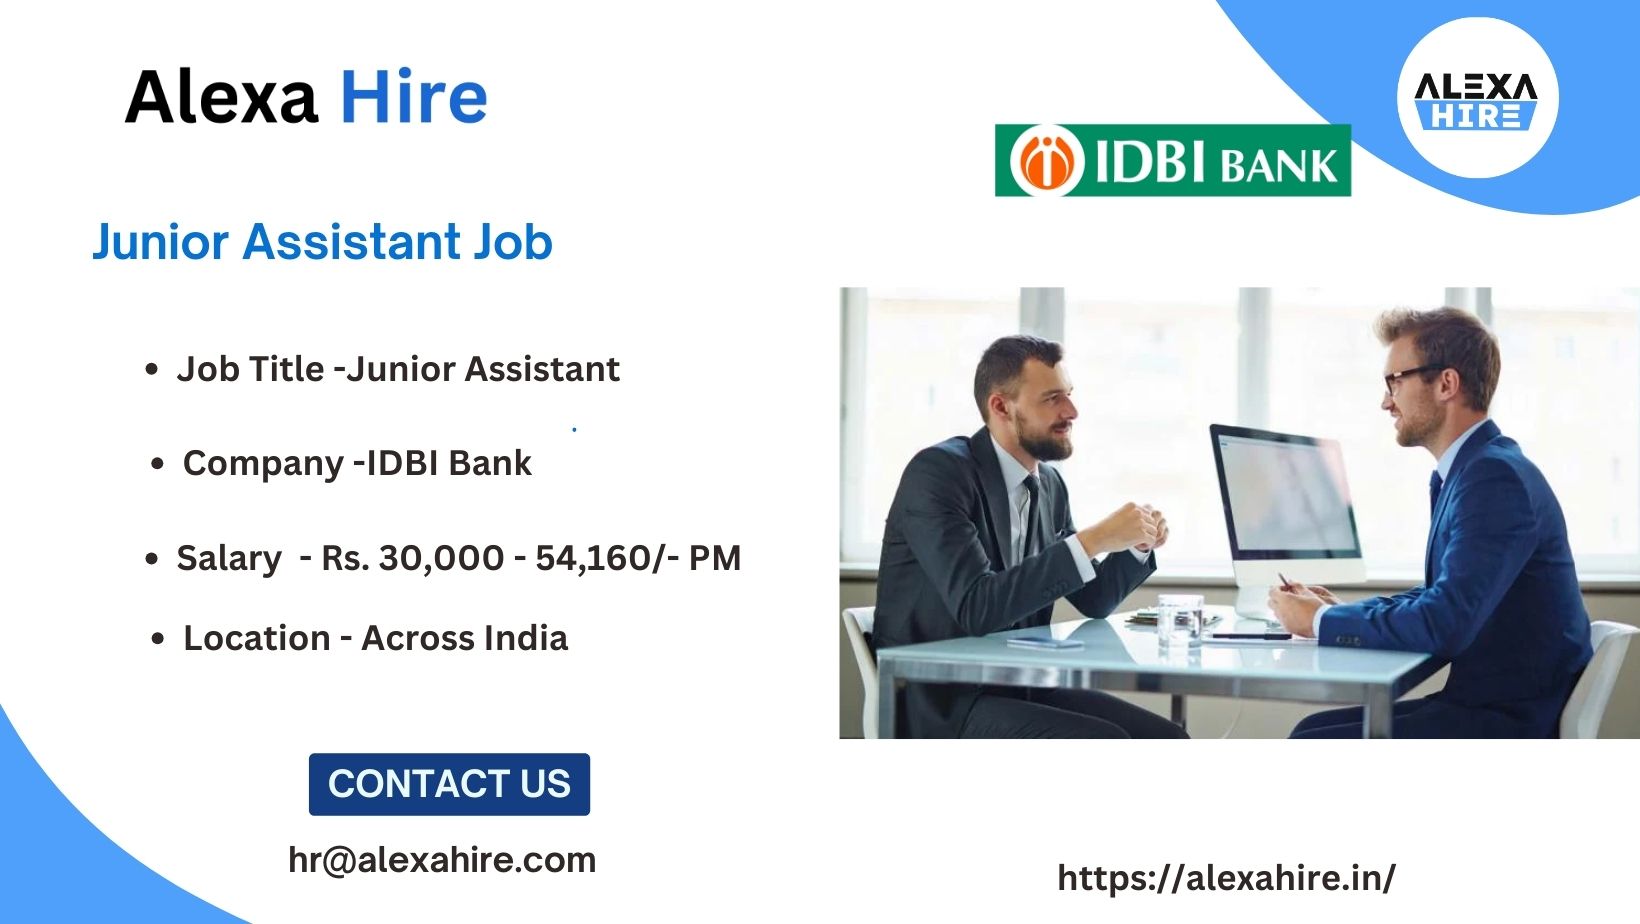 IDBI Bank Hiring Junior Assistant Job| Apply Right Now